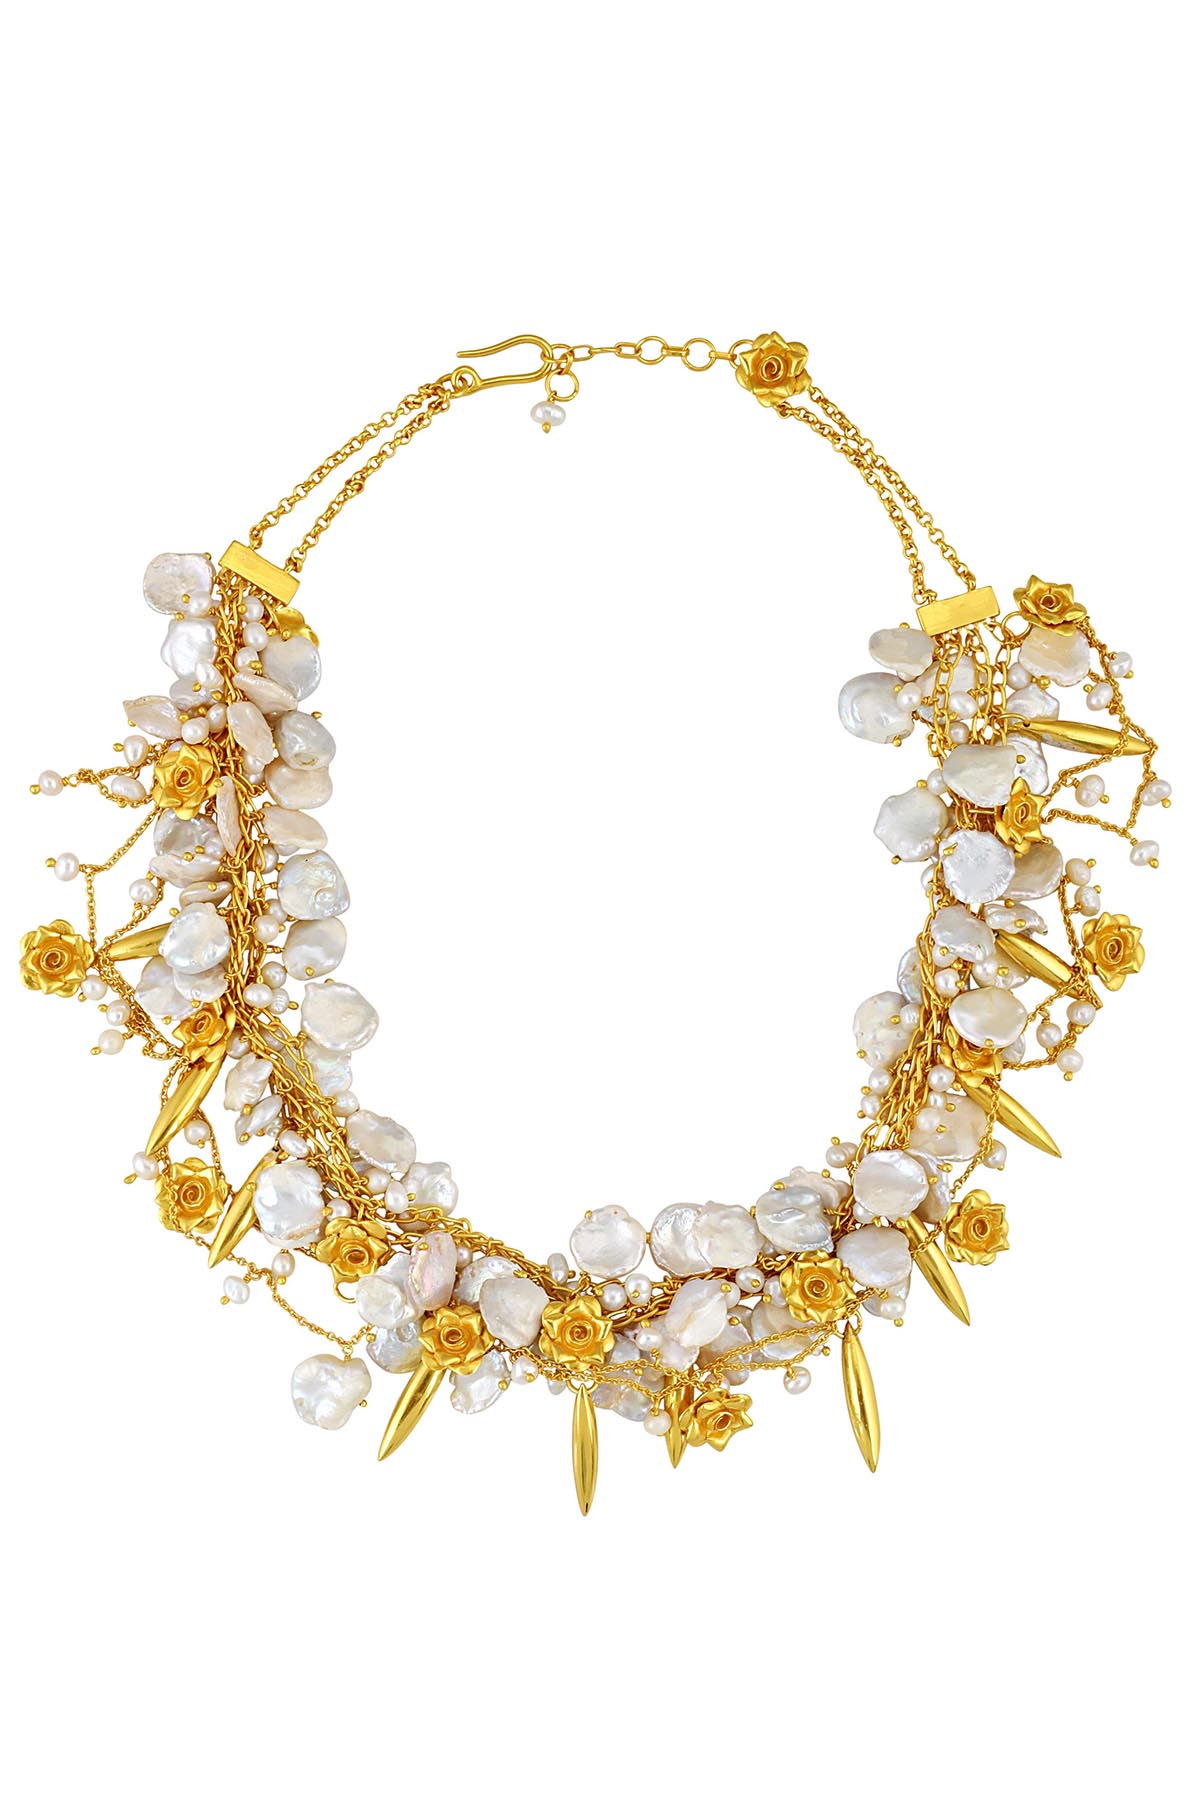 hansidon charm golden beads necklace pearl| Alibaba.com